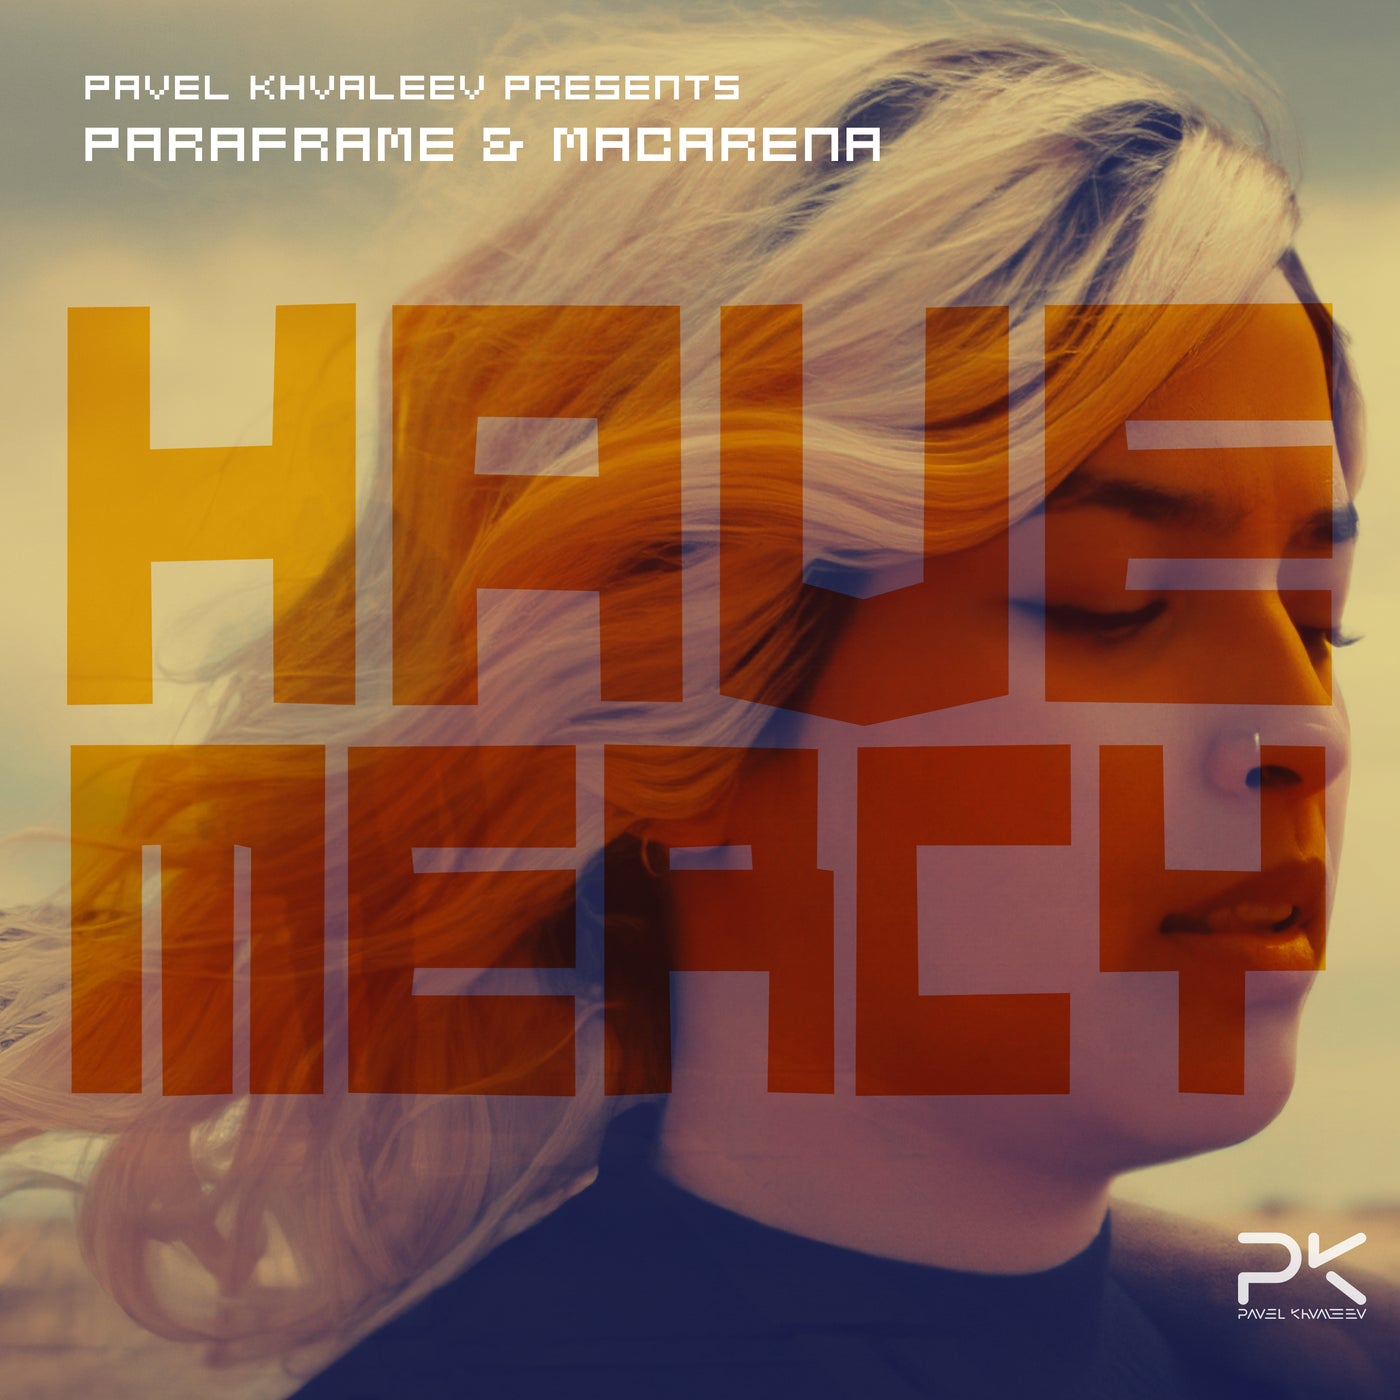 Pavel Khvaleev presents Paraframe feat. Macarena - Have Mercy (Pavel Khvaleev Extended Remix)